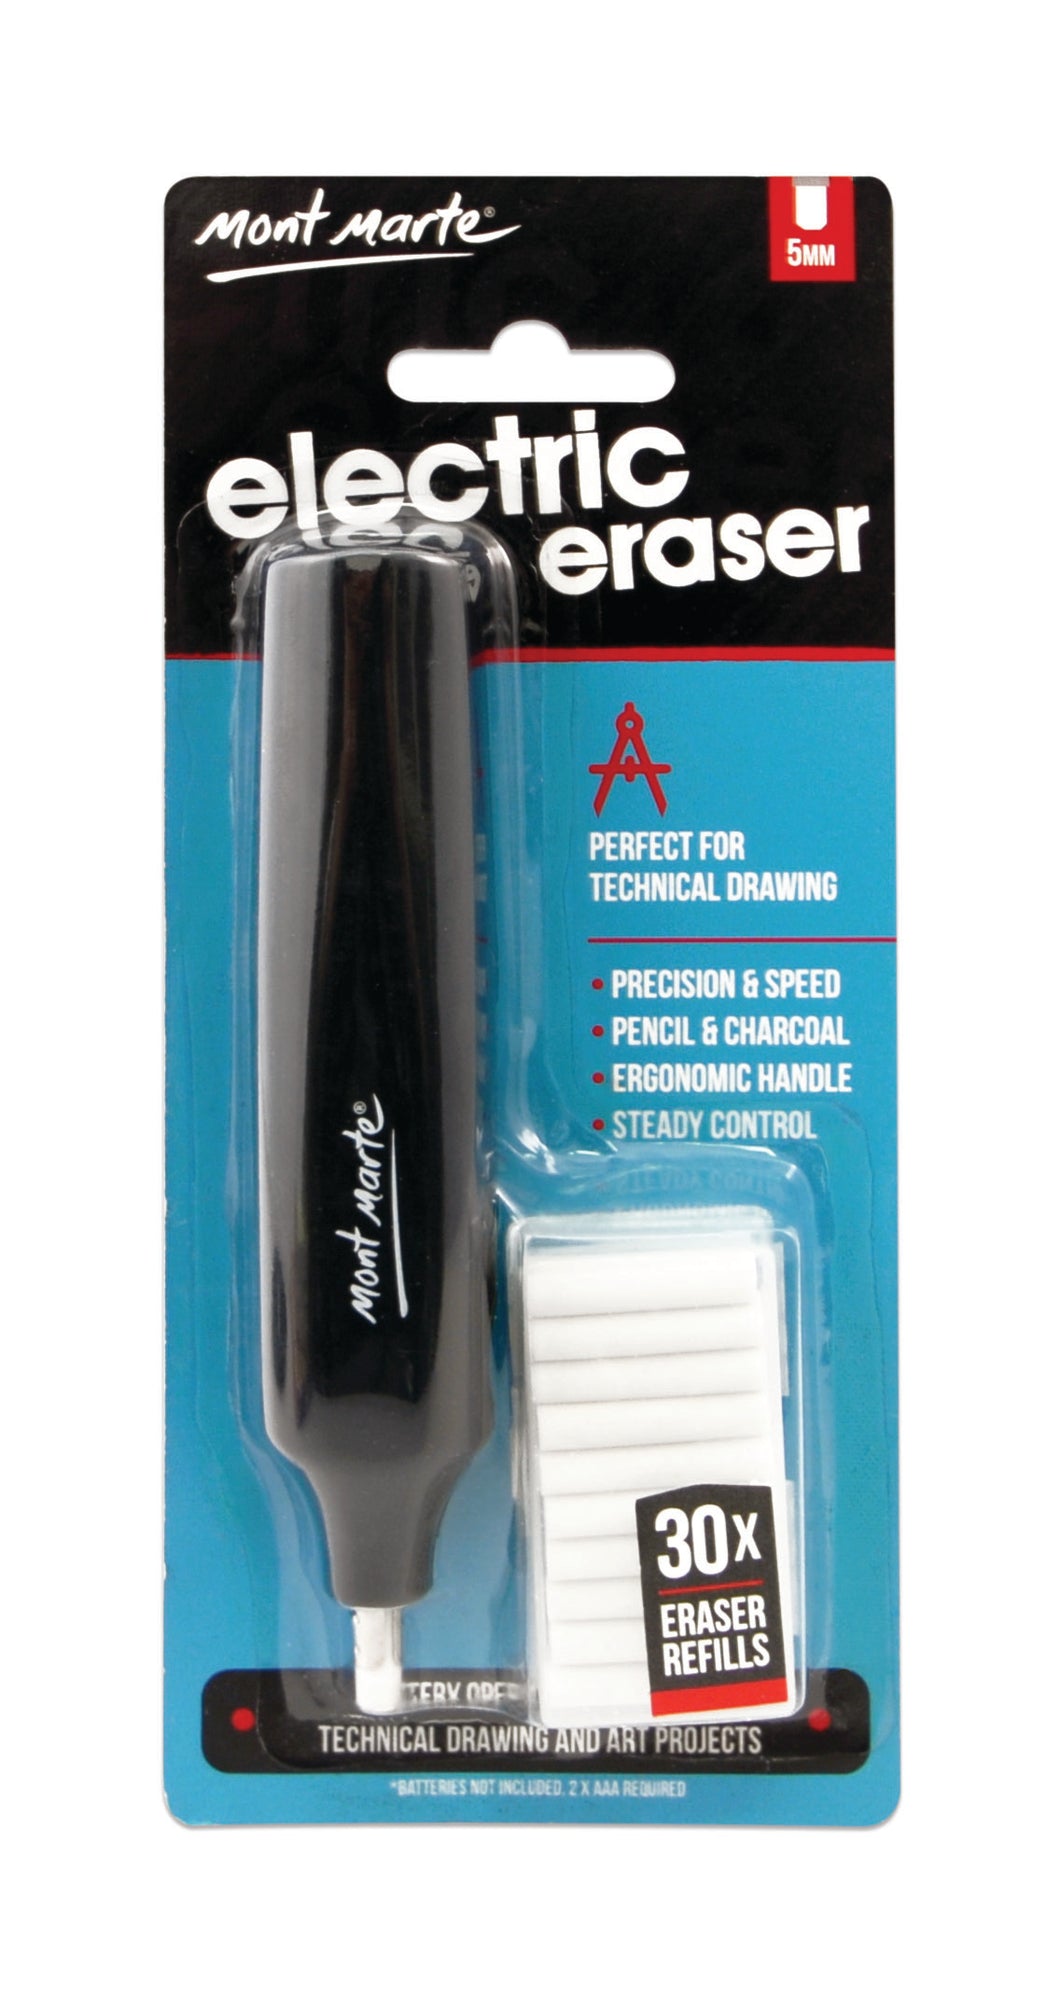 Monte Marte Electric Eraser with 30pc Erasers